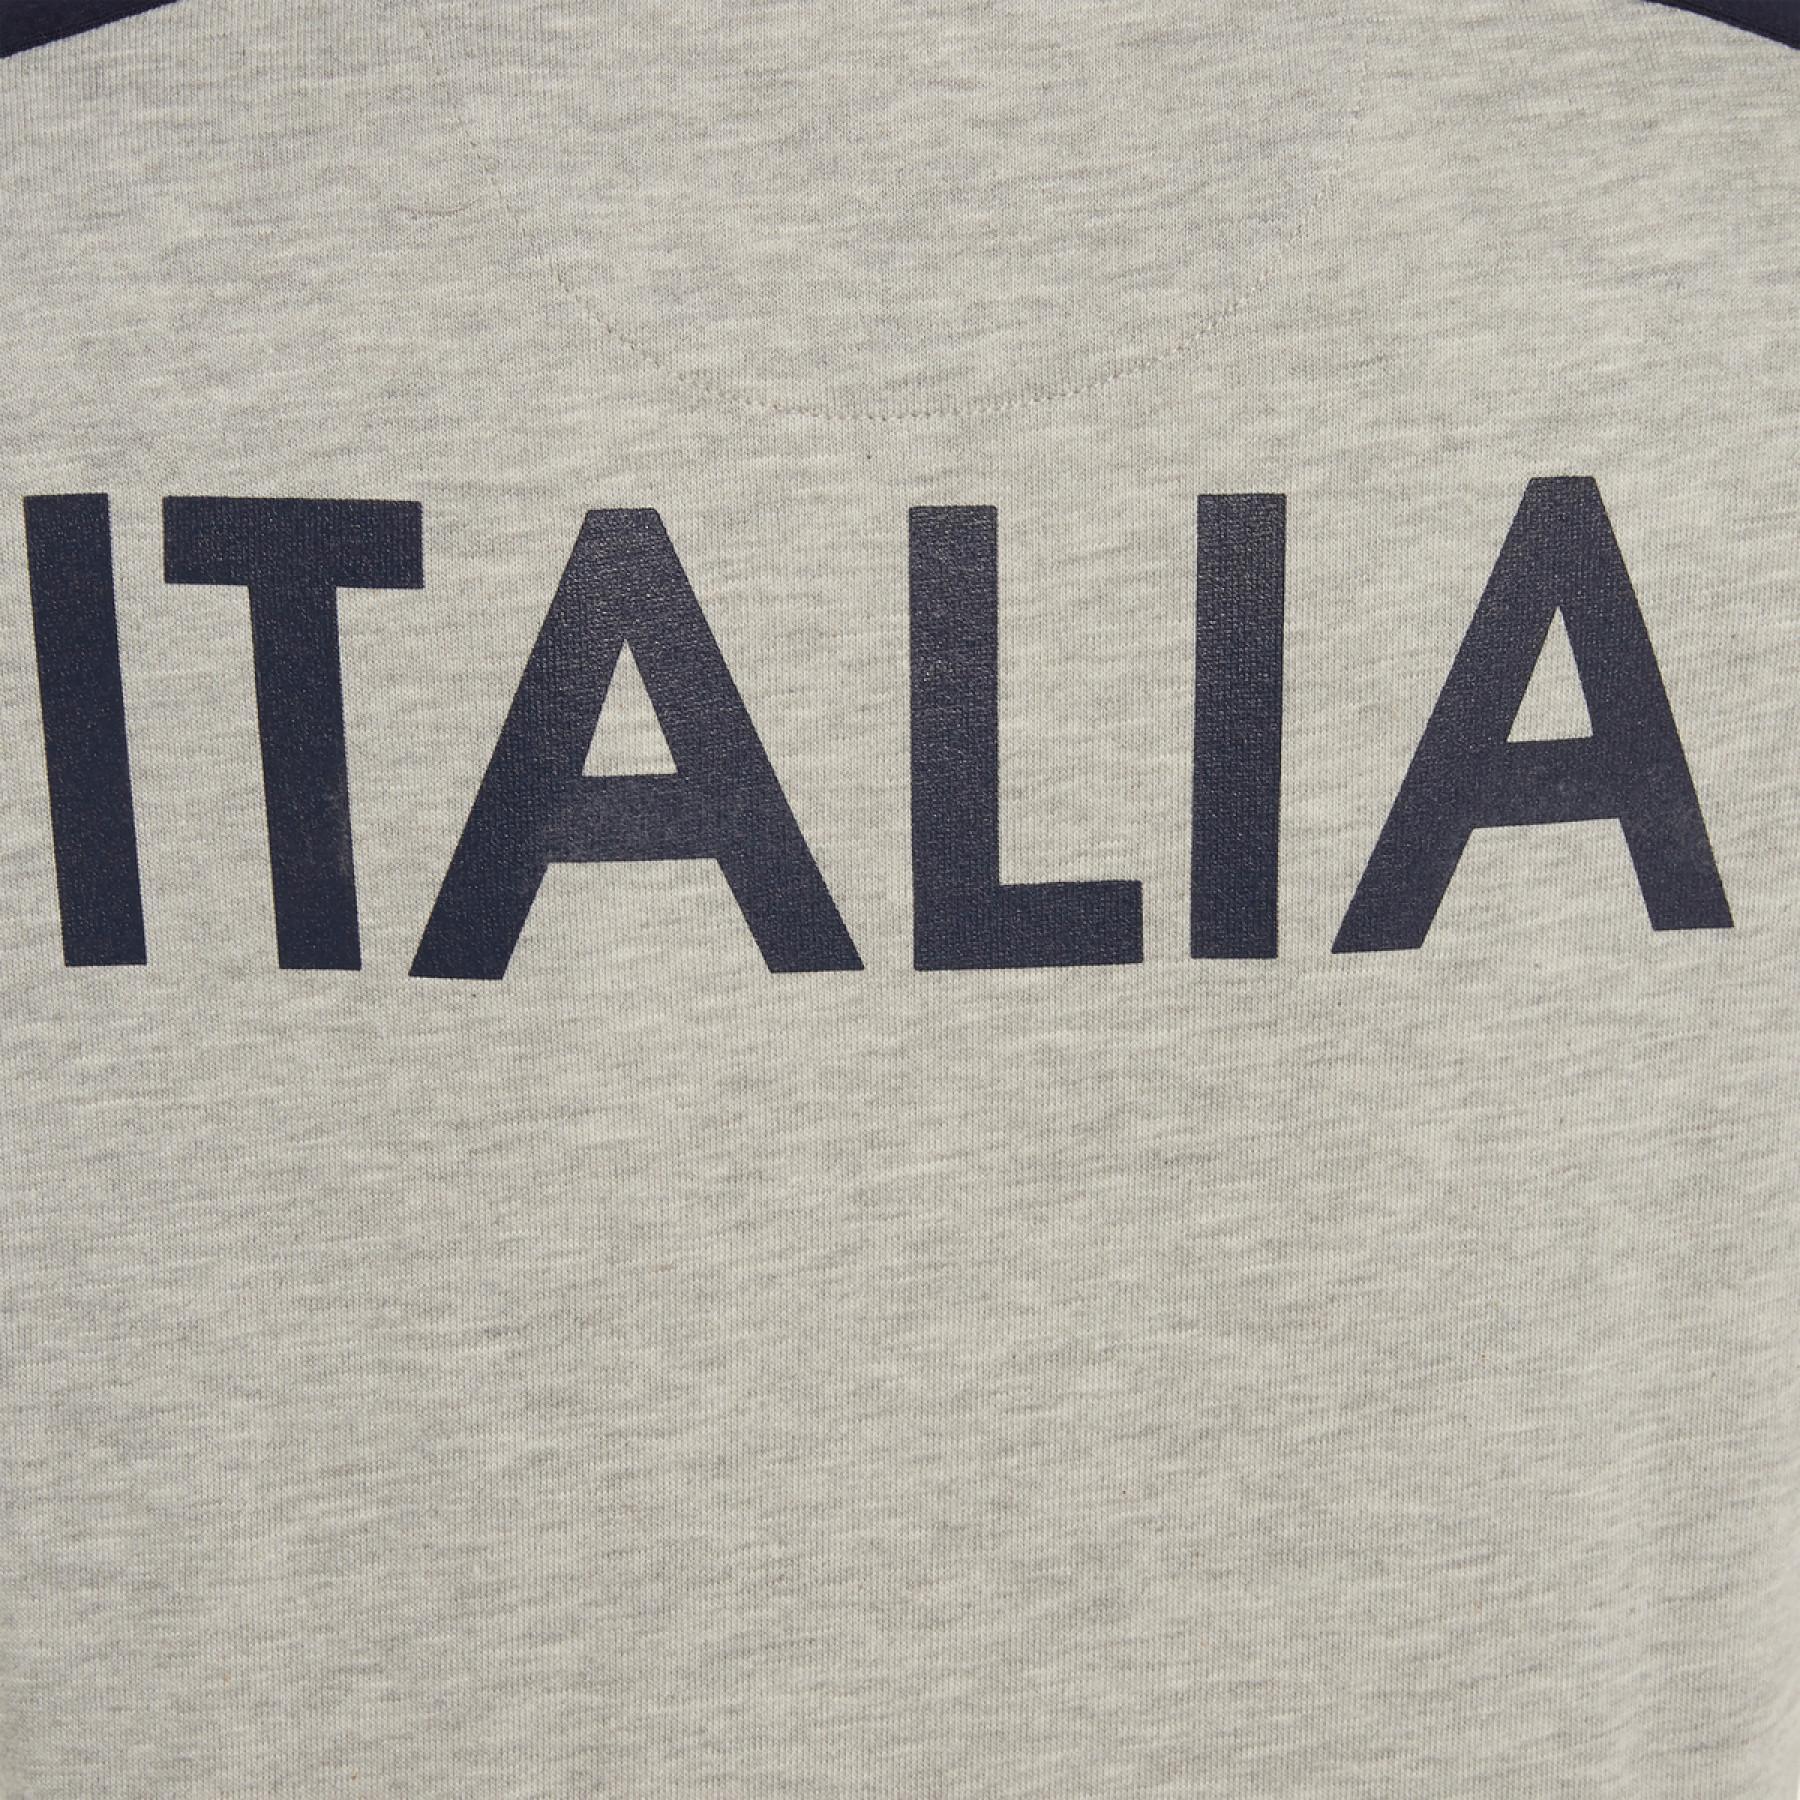 Child cotton T-shirt Italie rubgy 2019